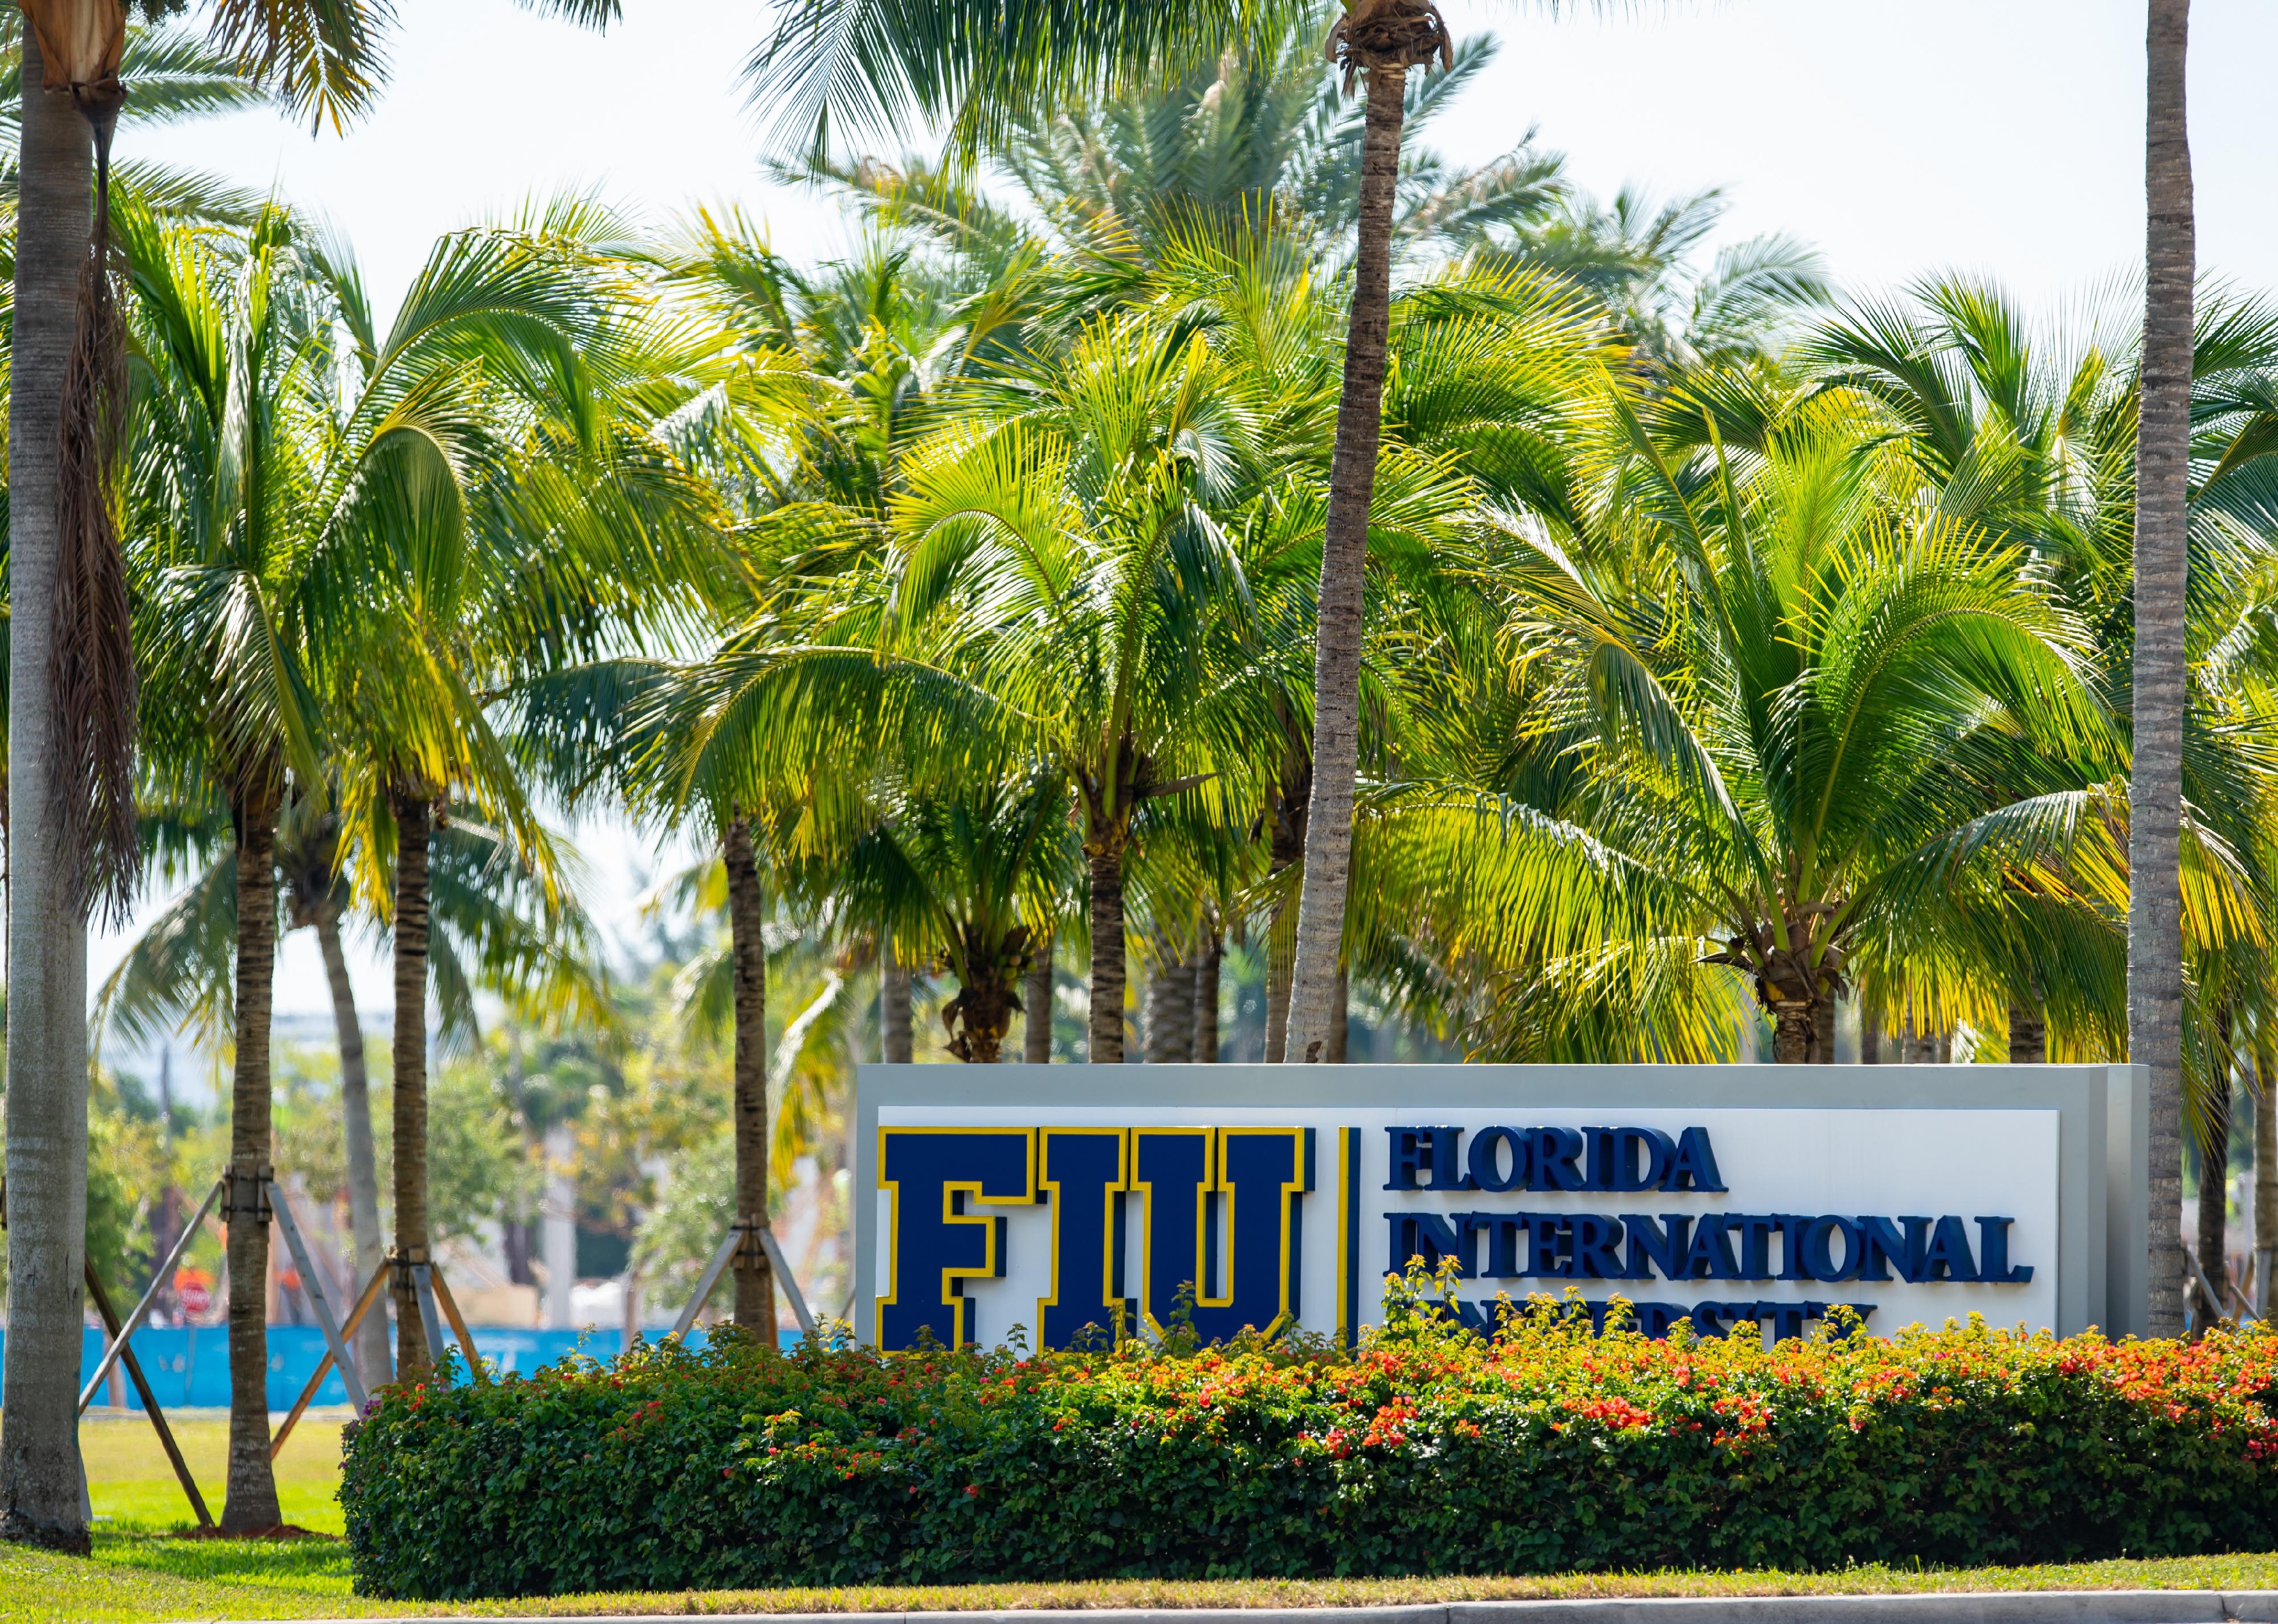 Florida International University campus entrance sign.